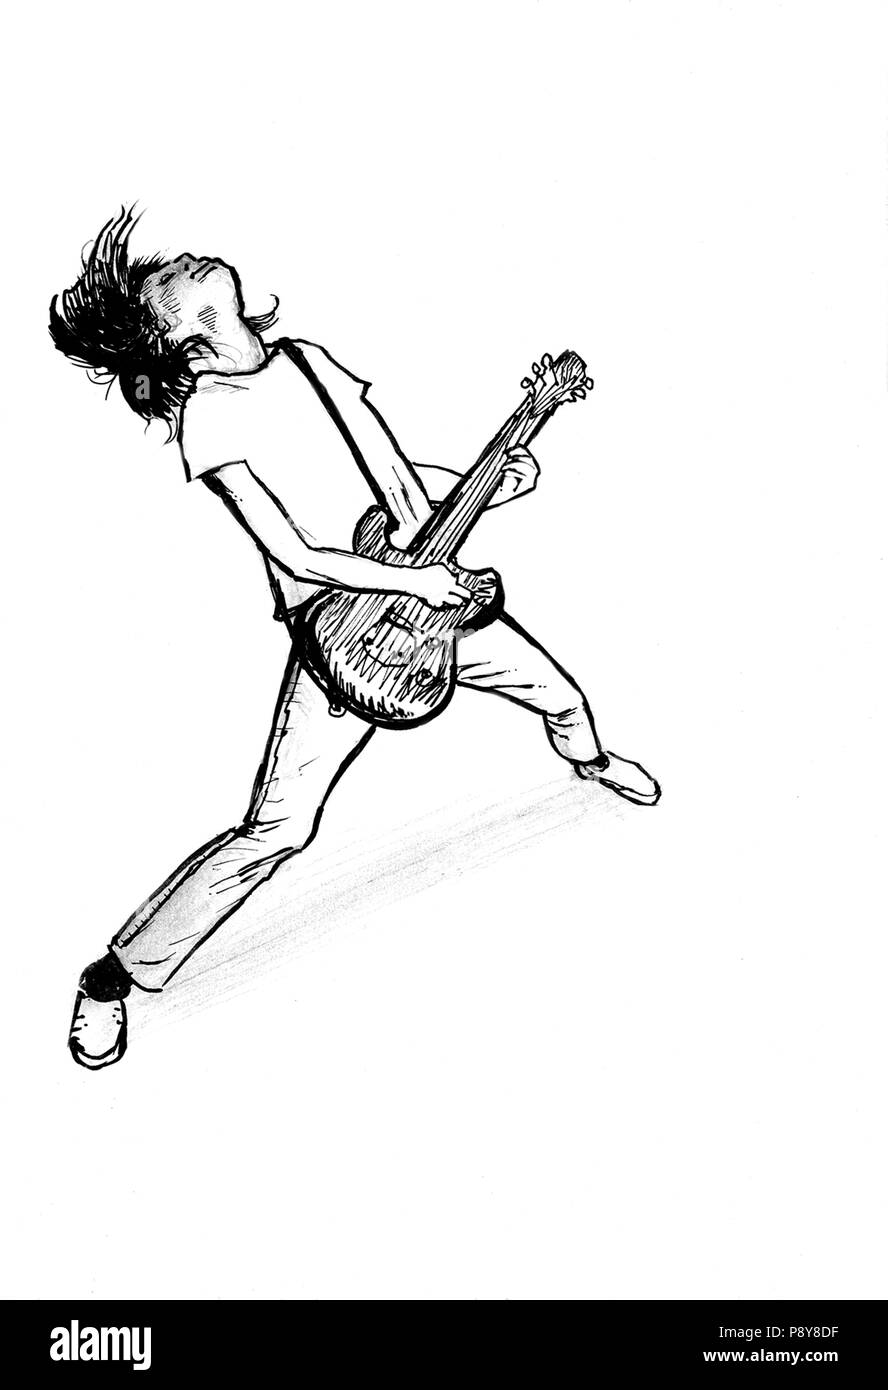 Ink drawing man plays electric guitar Stock Photo